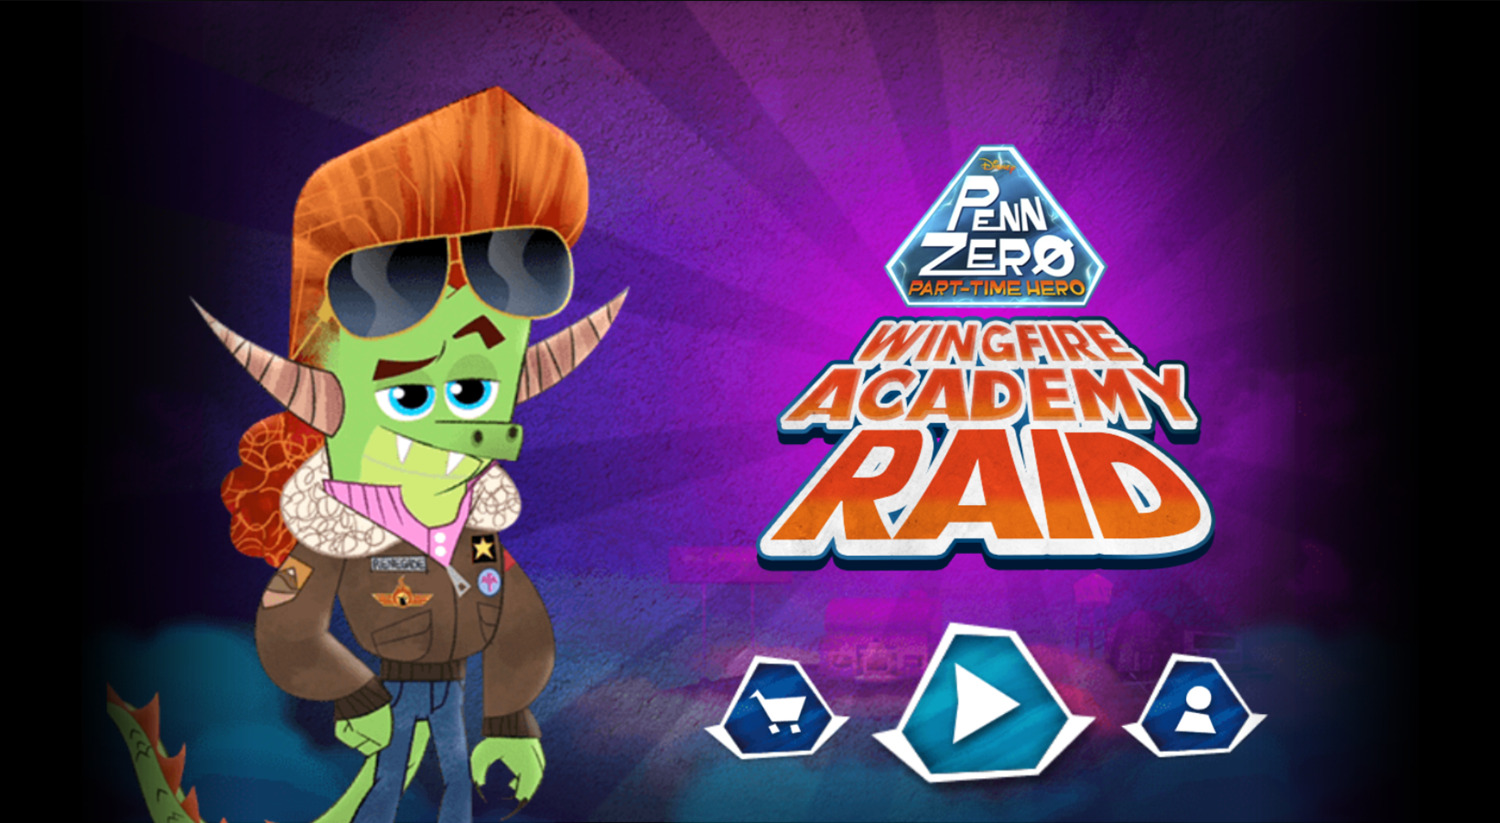 Penn Zero Part Time Hero Wingfire Academy Raid Game Welcome Screen Screenshot.